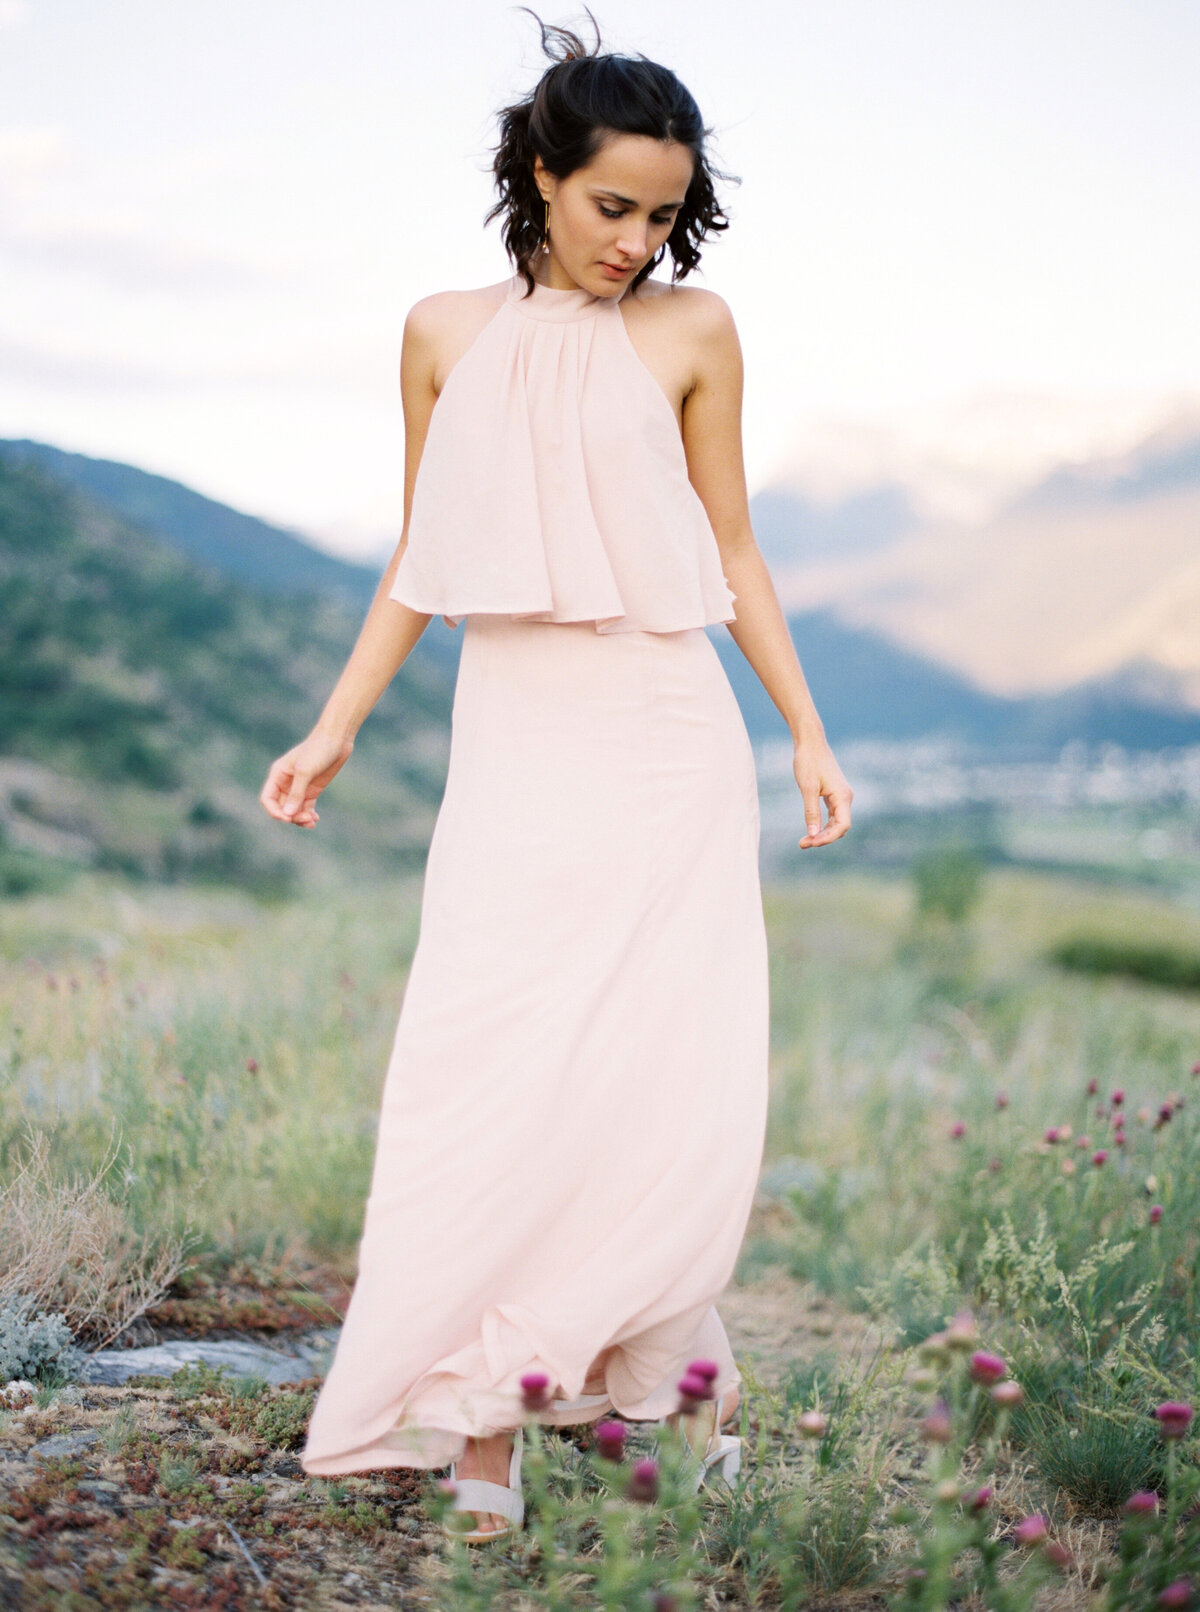 Woman walks through wildflower filled field in pink chiffon dress